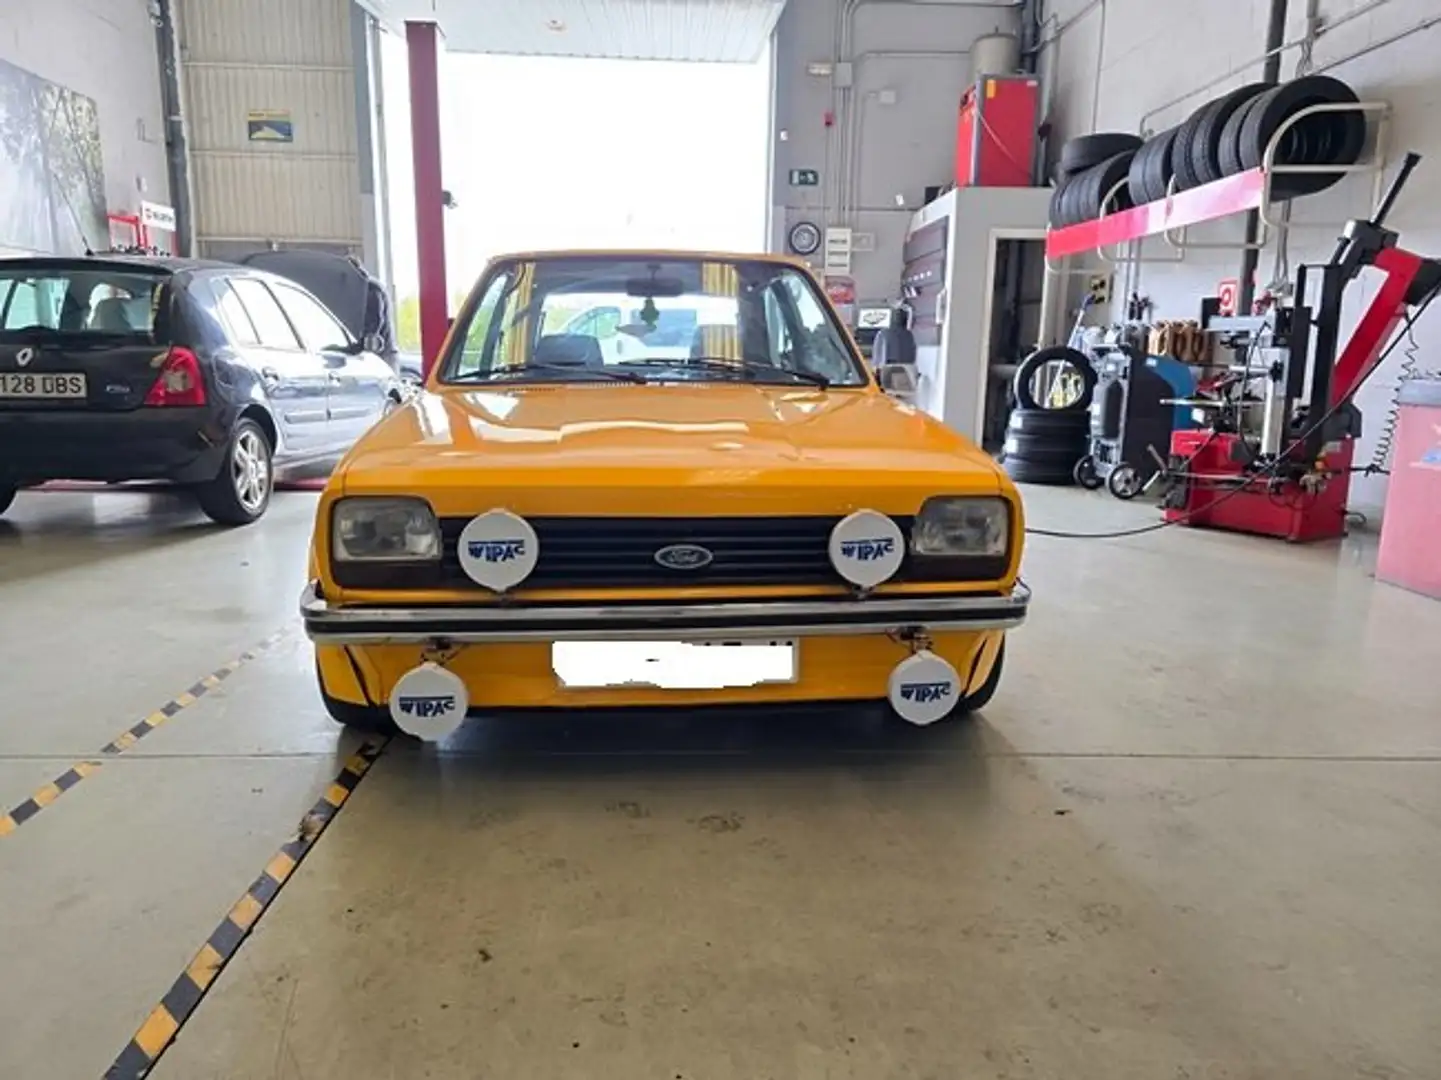 Ford Fiesta Yellow - 2